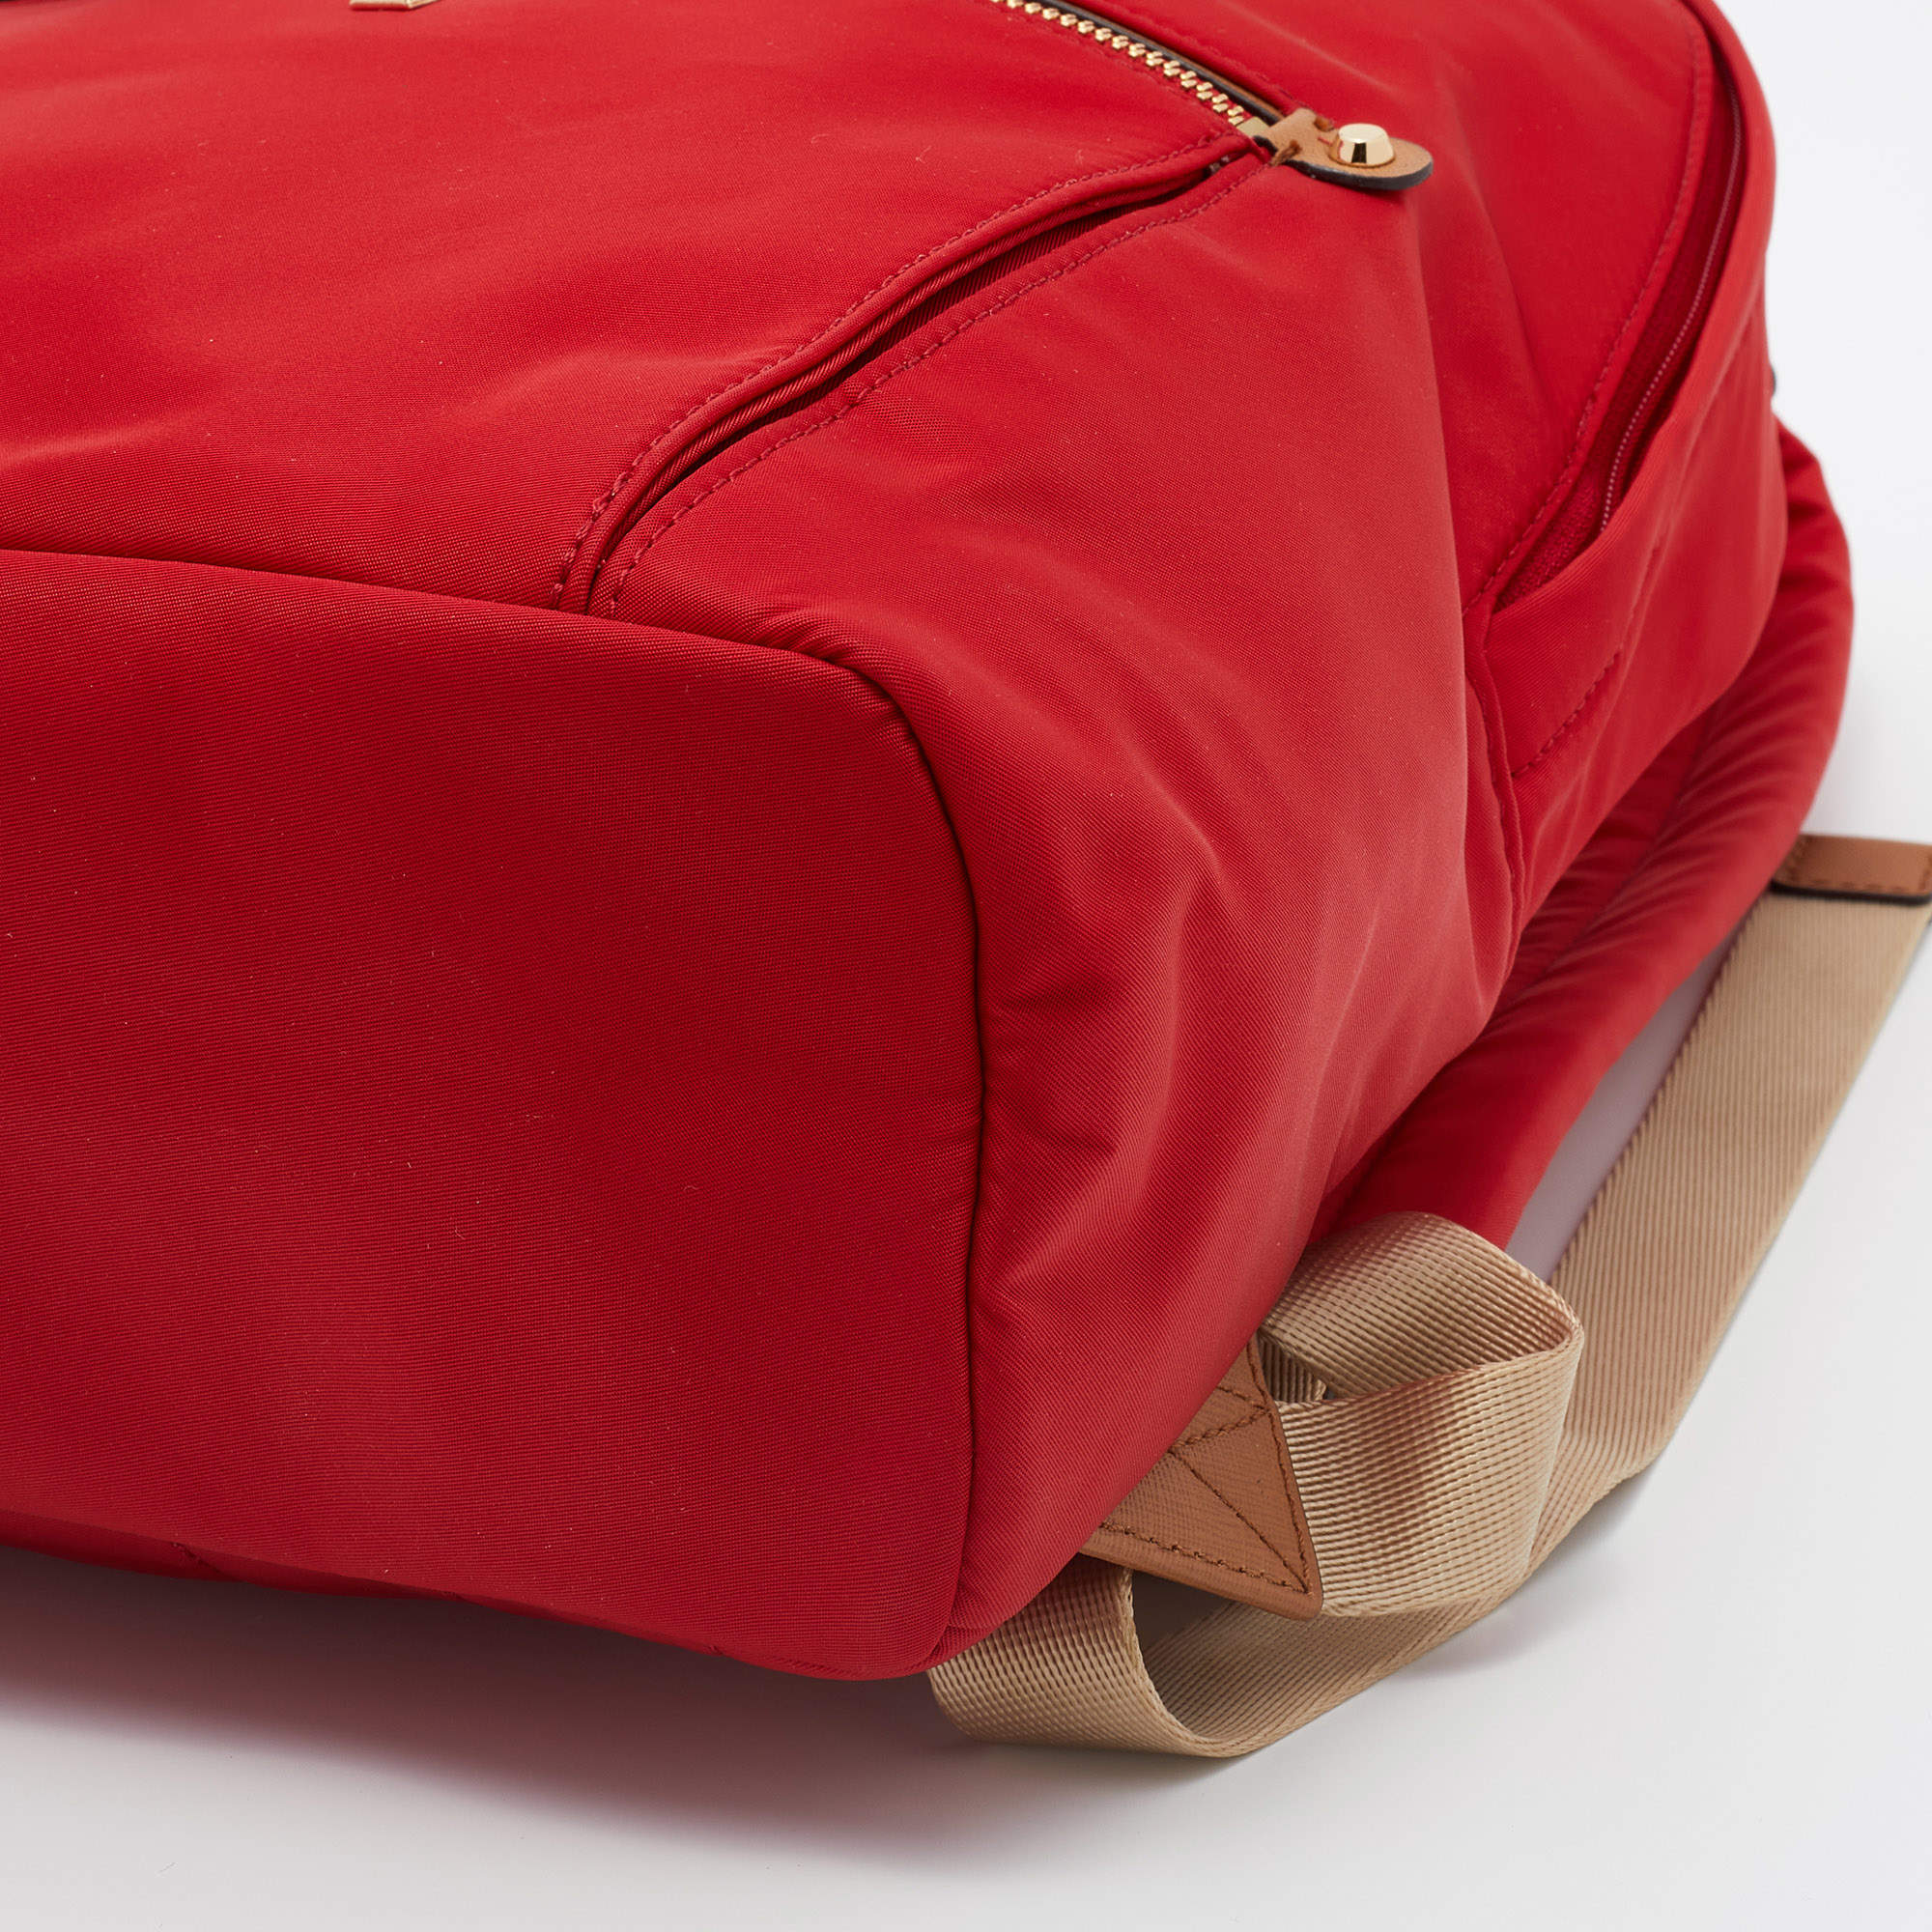 NWT Michael Kors Jet Set Item Large Nylon Backpack Book Bag 38T6YTTB3C Red  NEW